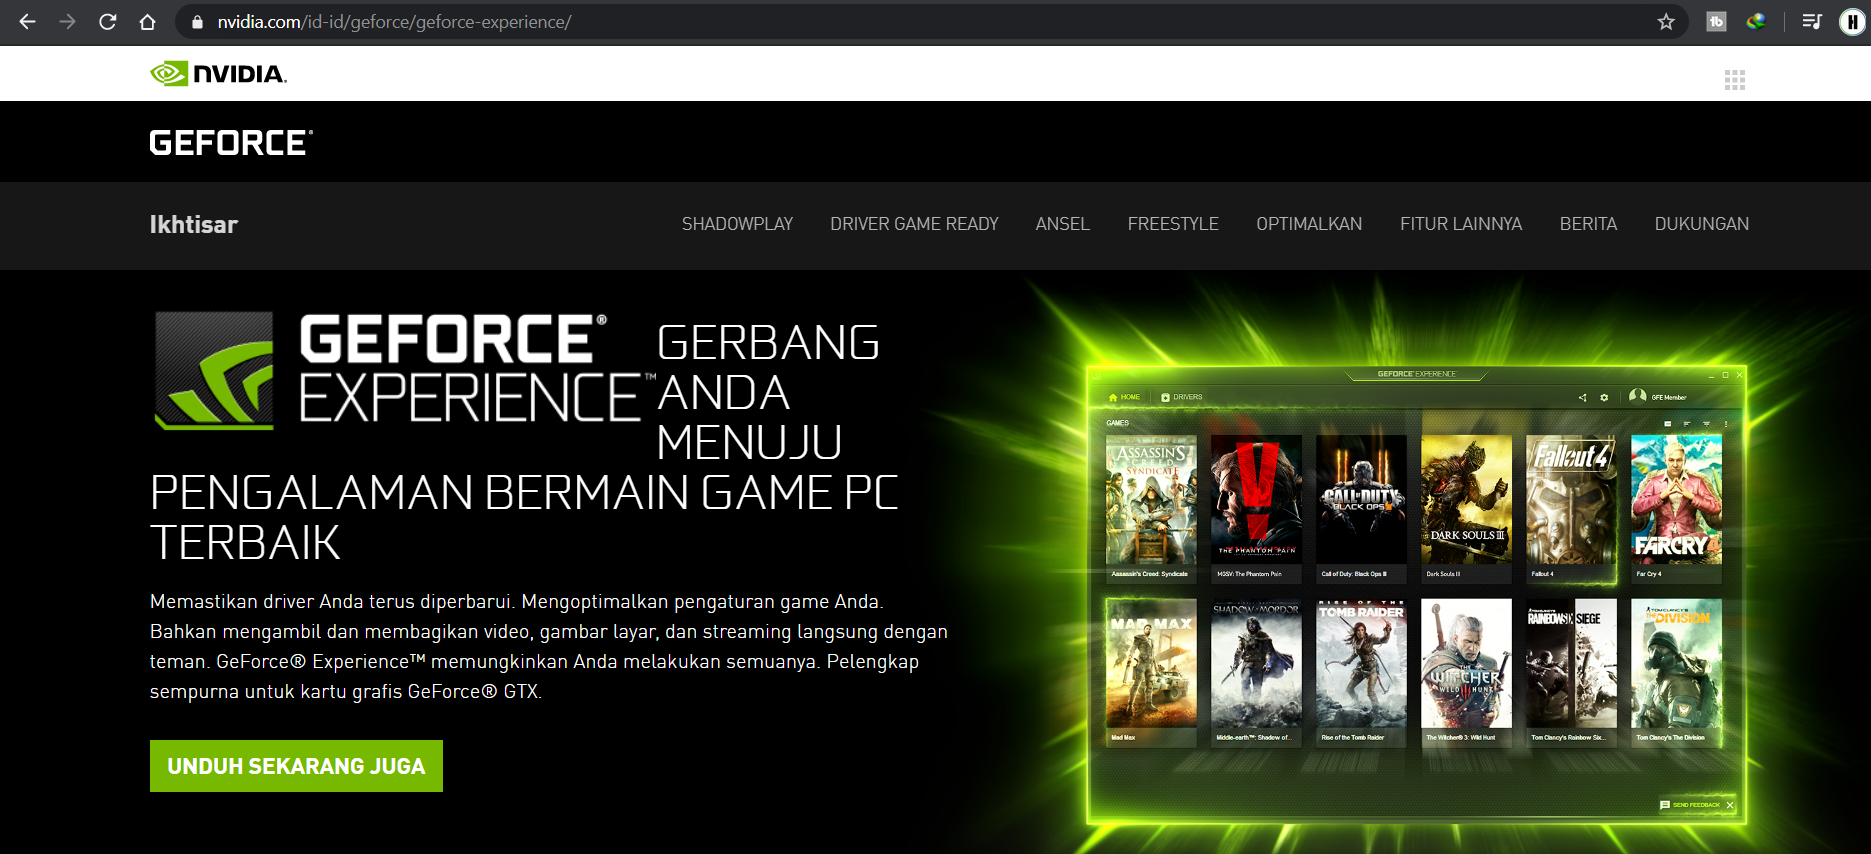 Новая программа nvidia. GEFORCE experience (джифорс экспириенс). GEFORCE experience в игре. NVIDIA приложение. Приложение NVIDIA GEFORCE experience.